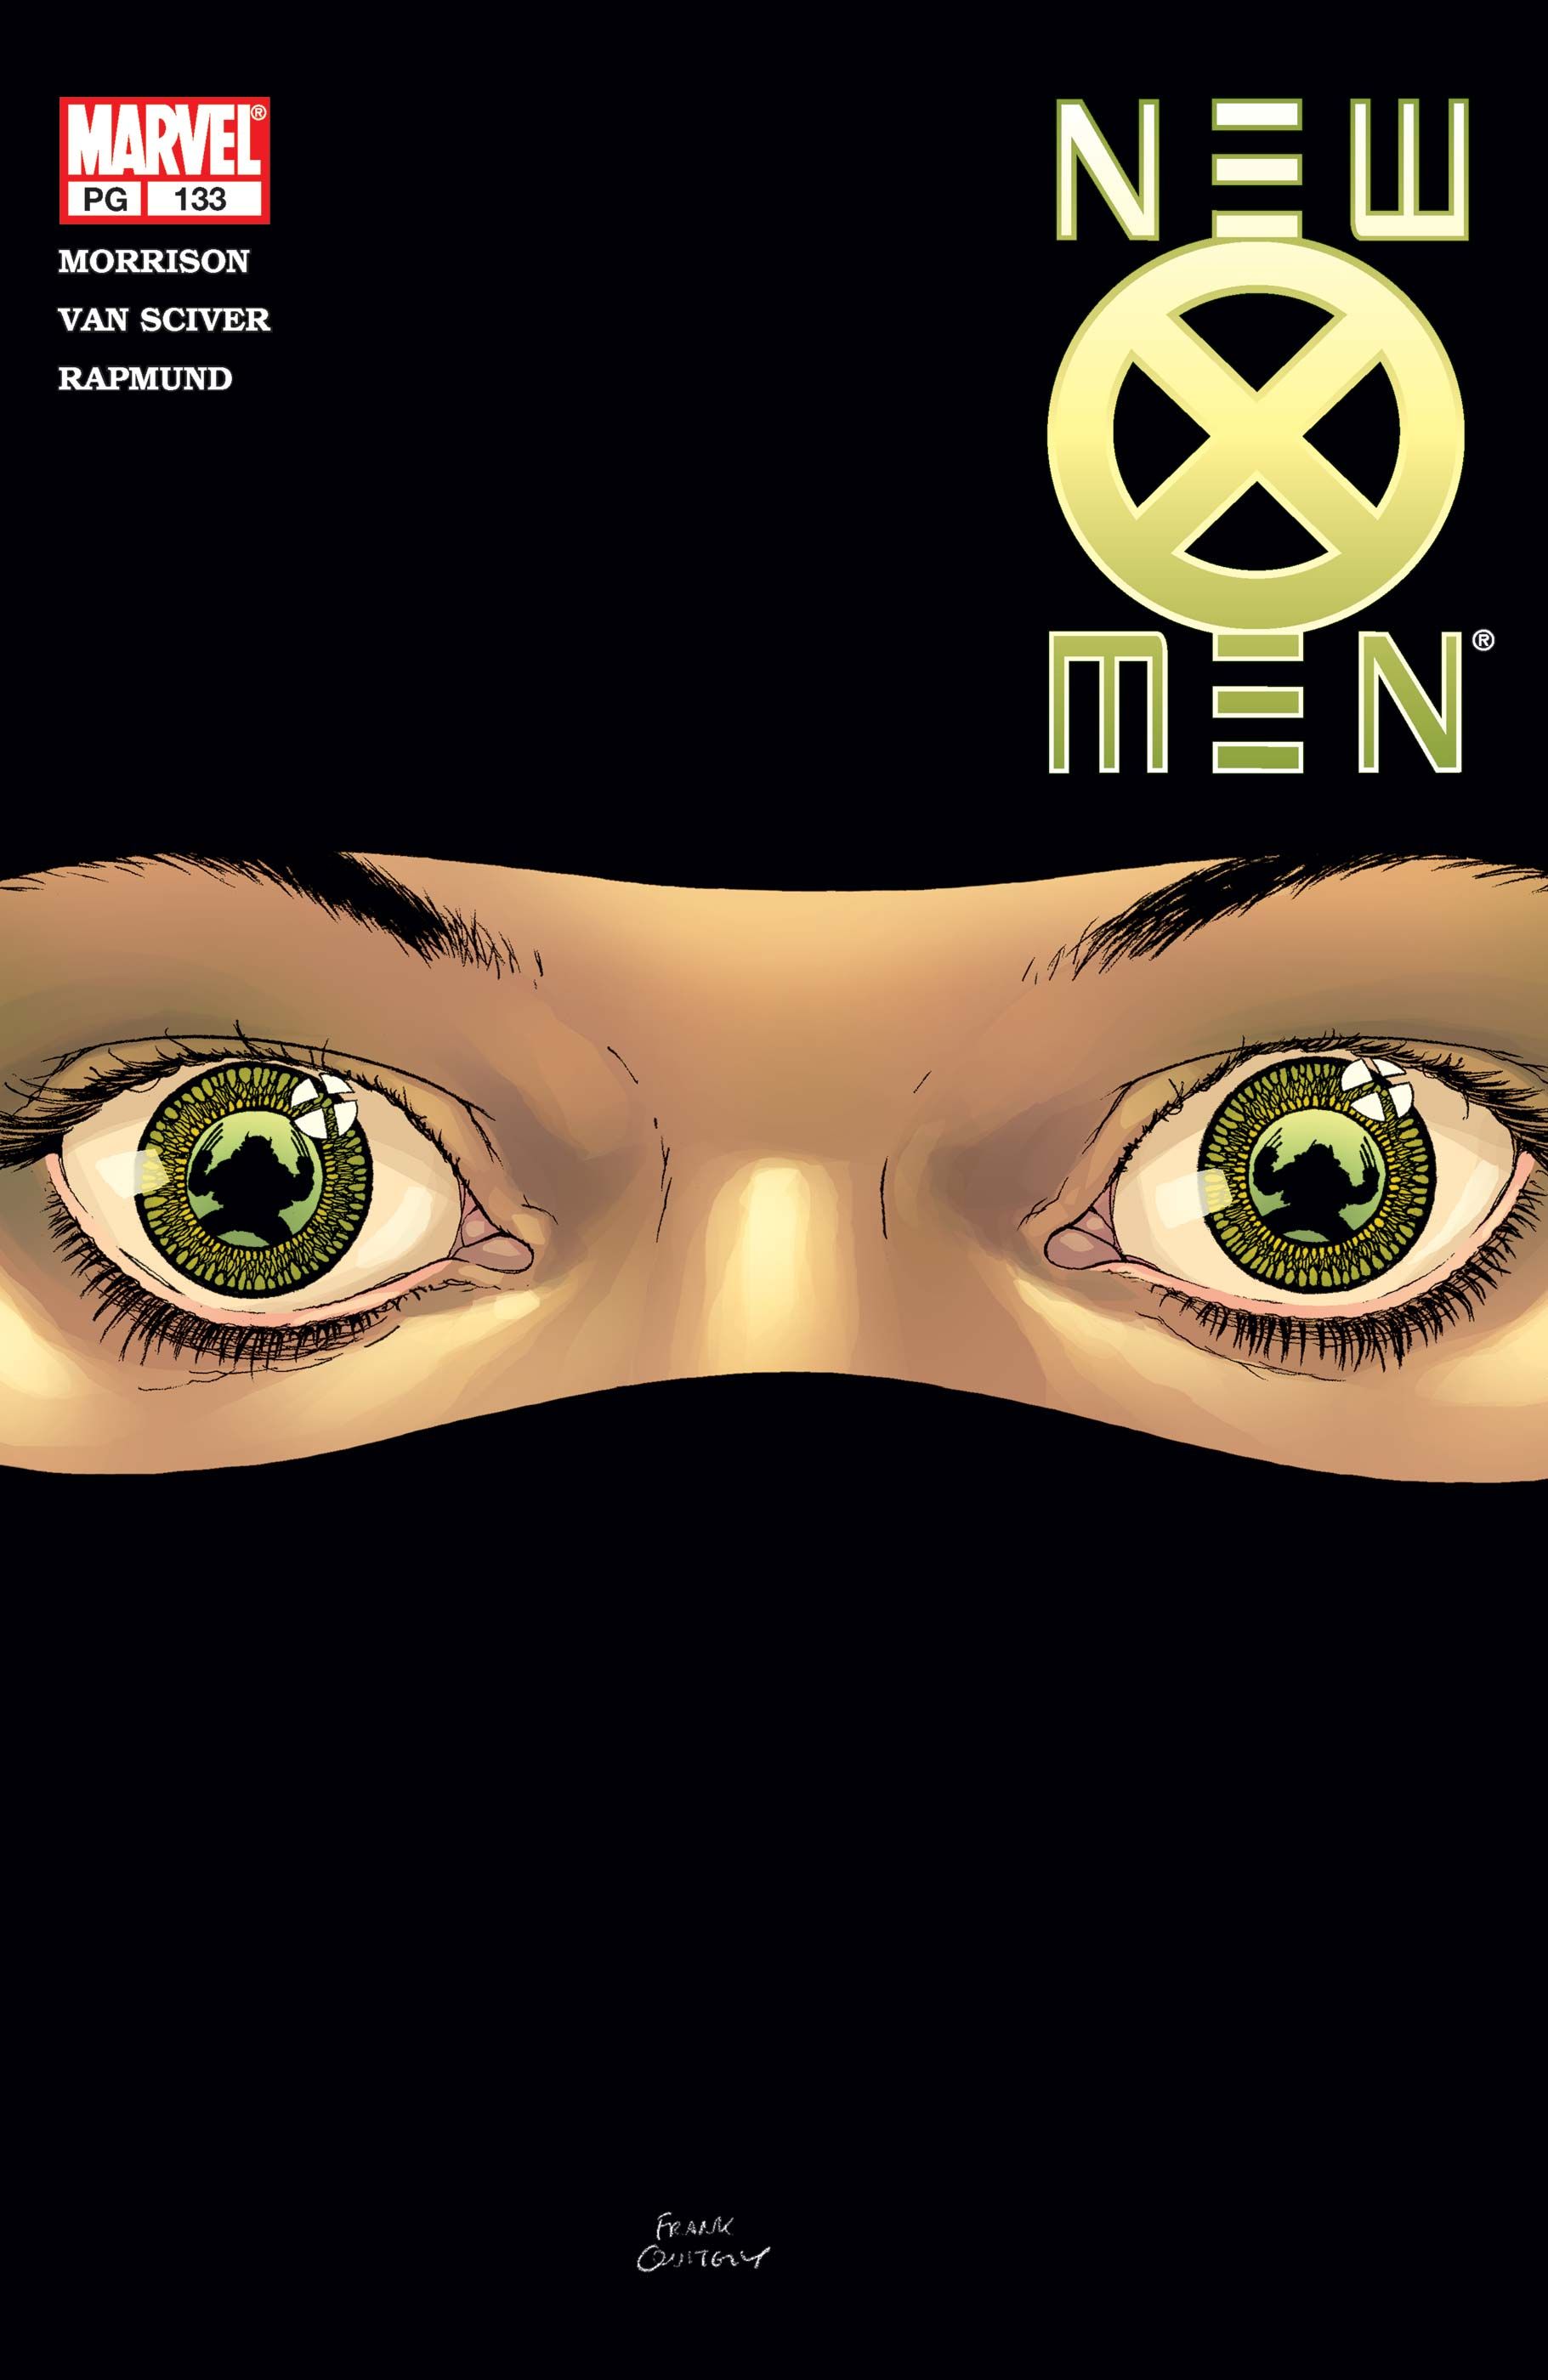 Staub auf Frank Quitelys Cover zu New X-Men #133